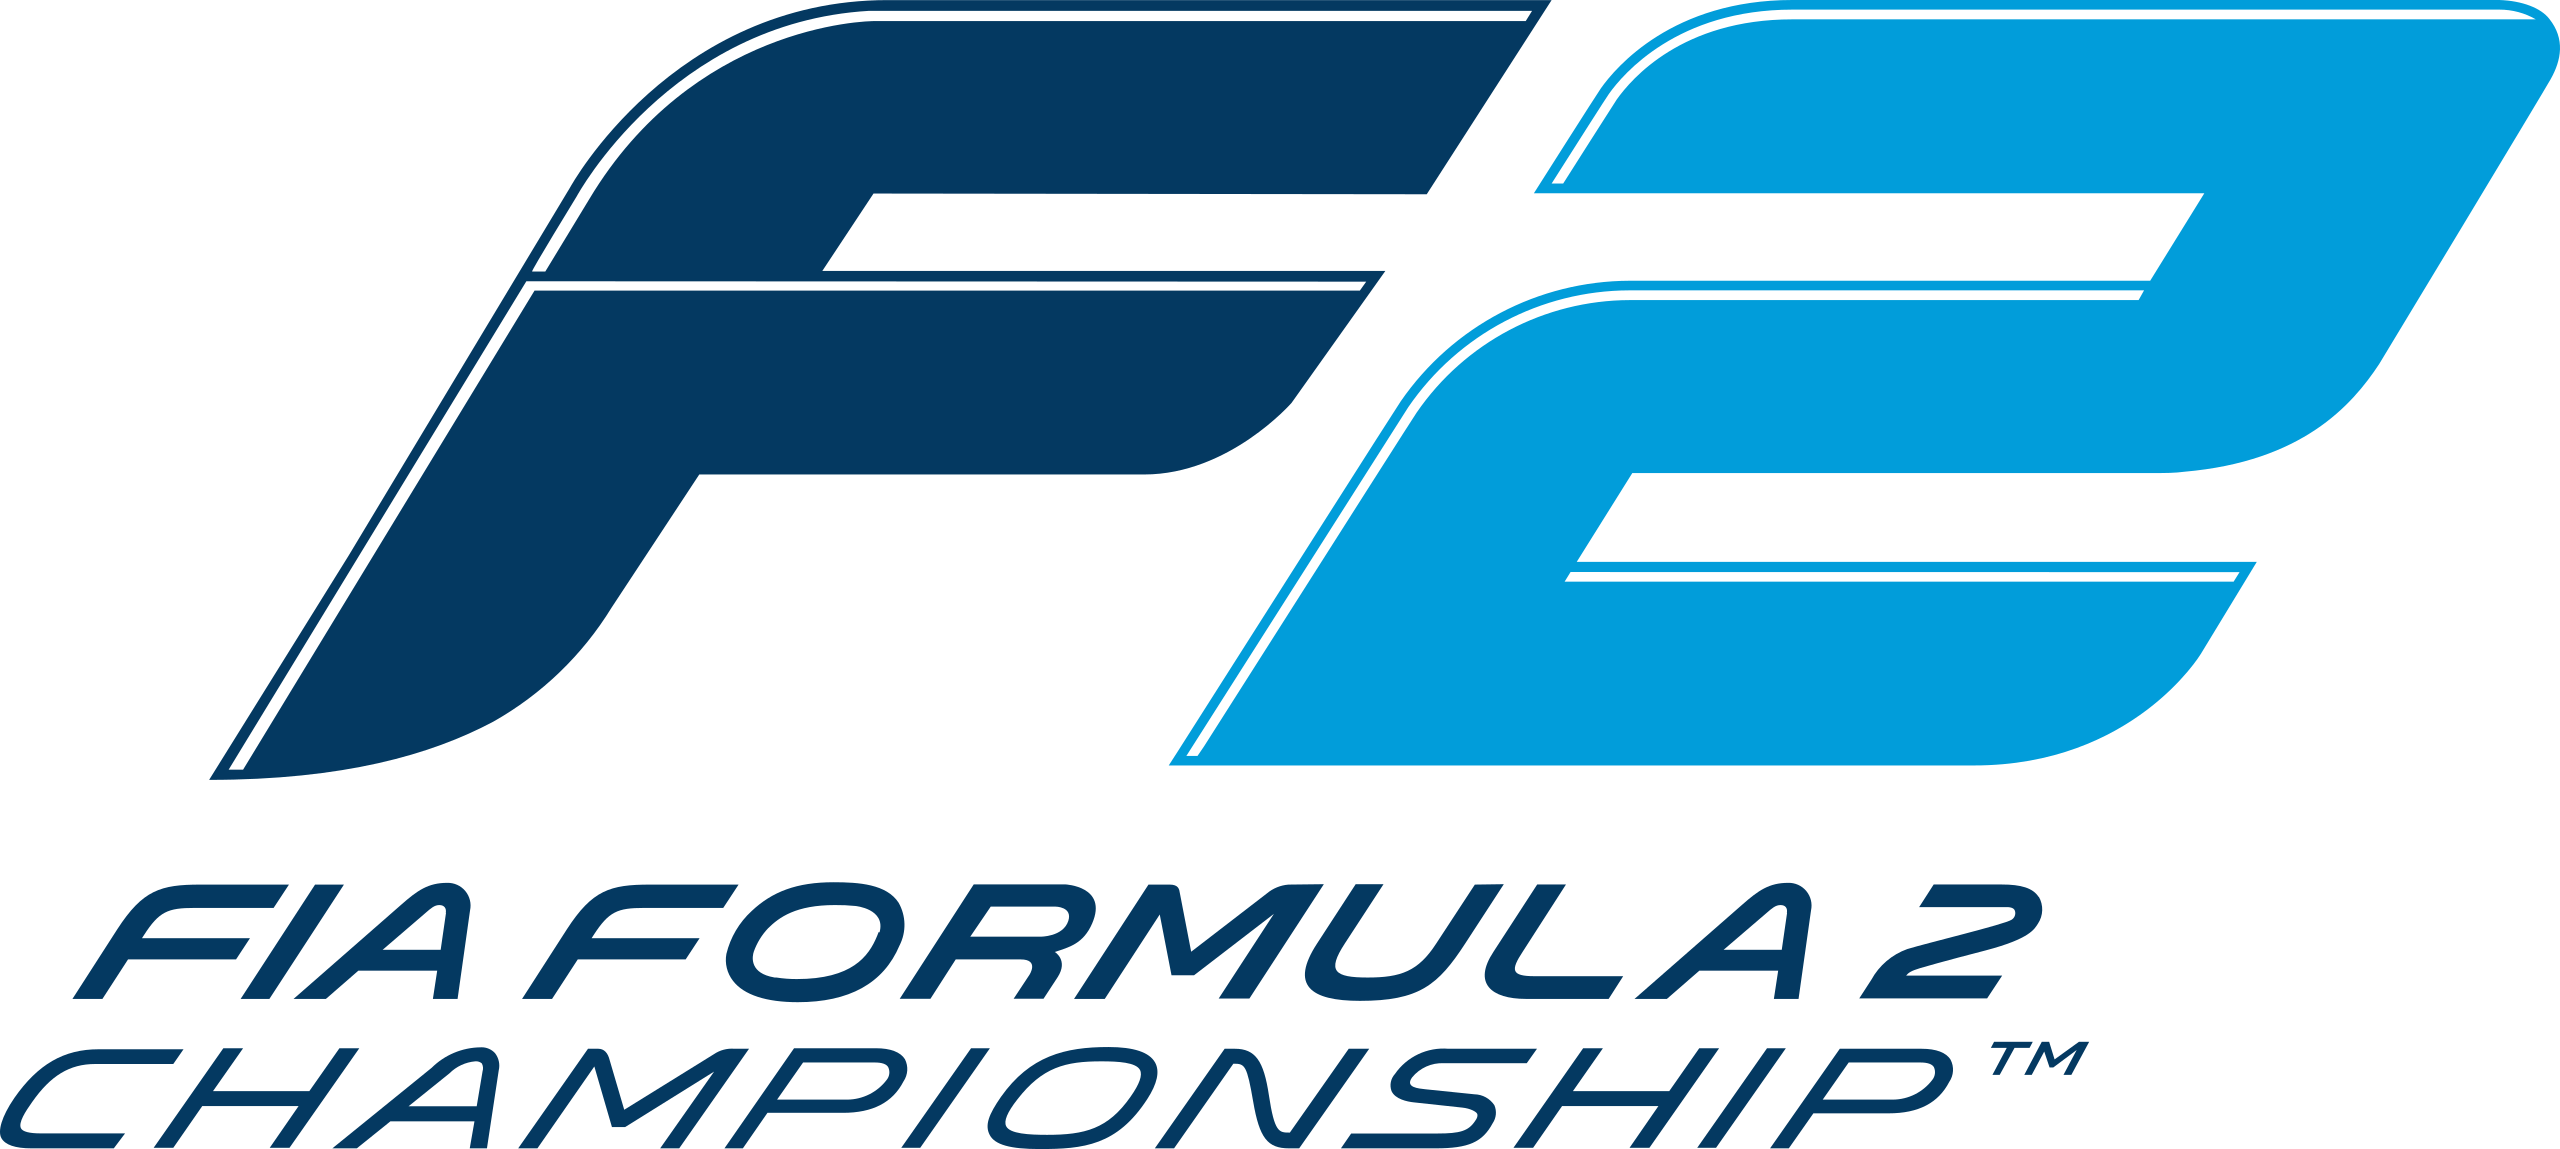 Formule2 2022 GP13 Monza Kwalificatie DUTCH 720p WEB-DL AAC2 0 x264-UGDV